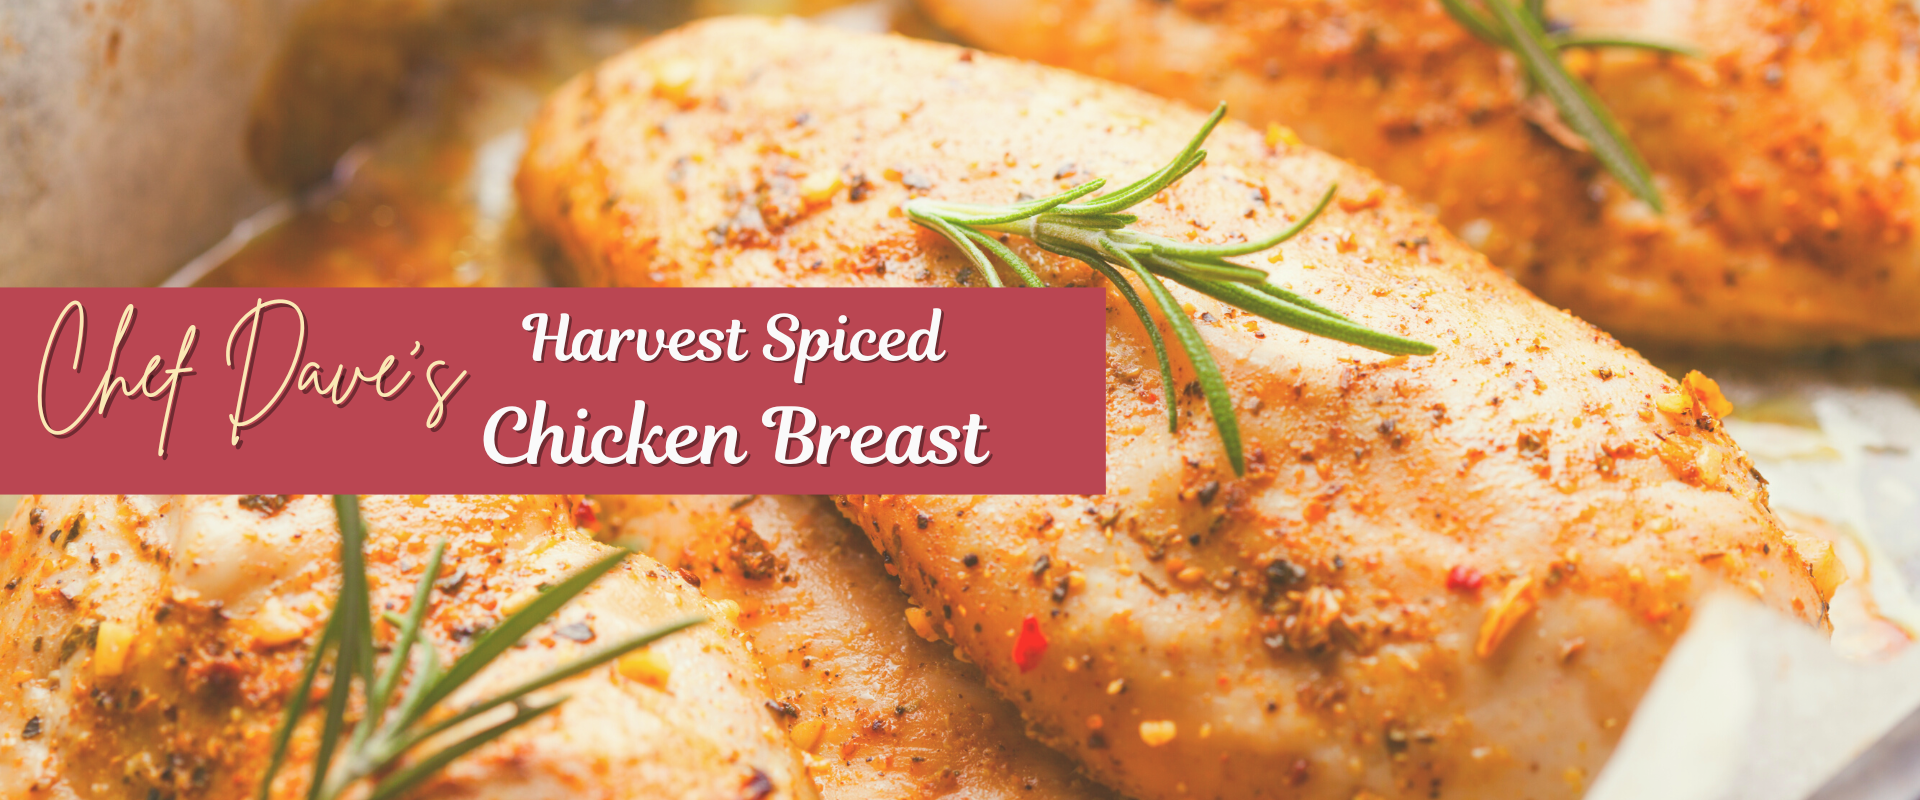 Harvest spiced chicken breast